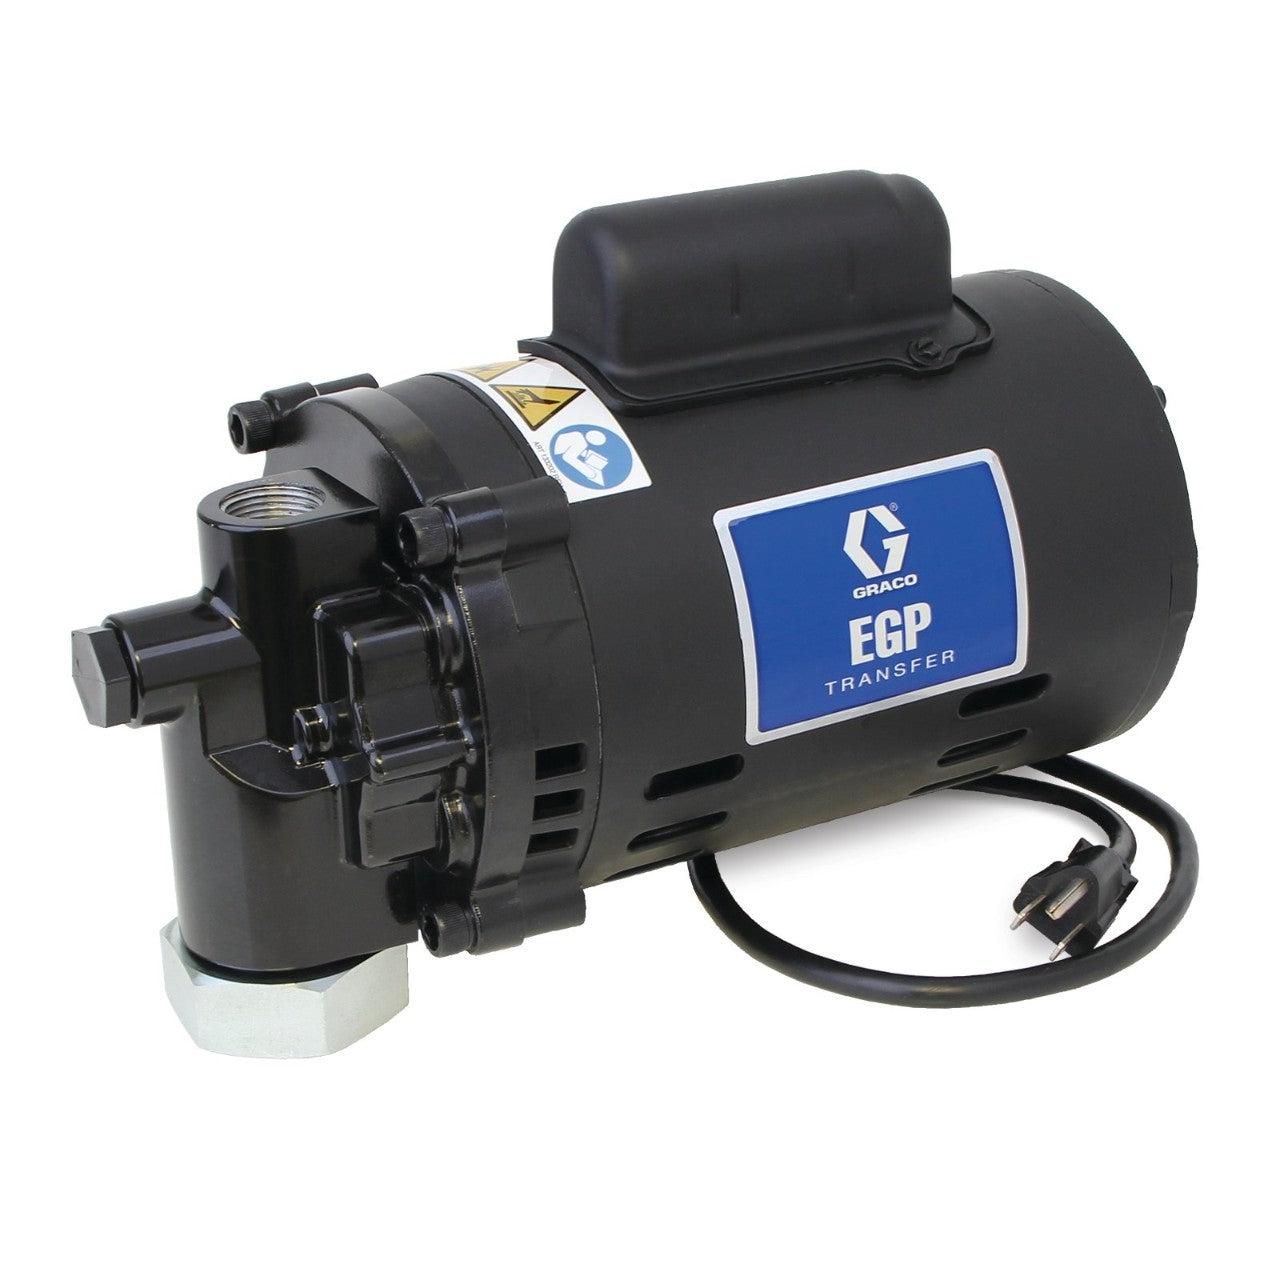 EGP‚Ñ¢ Transfer Pump and Dispense Package, 115 VAC, 7.7 gpm (29.1 lpm), 65 psi (4.5 bar)